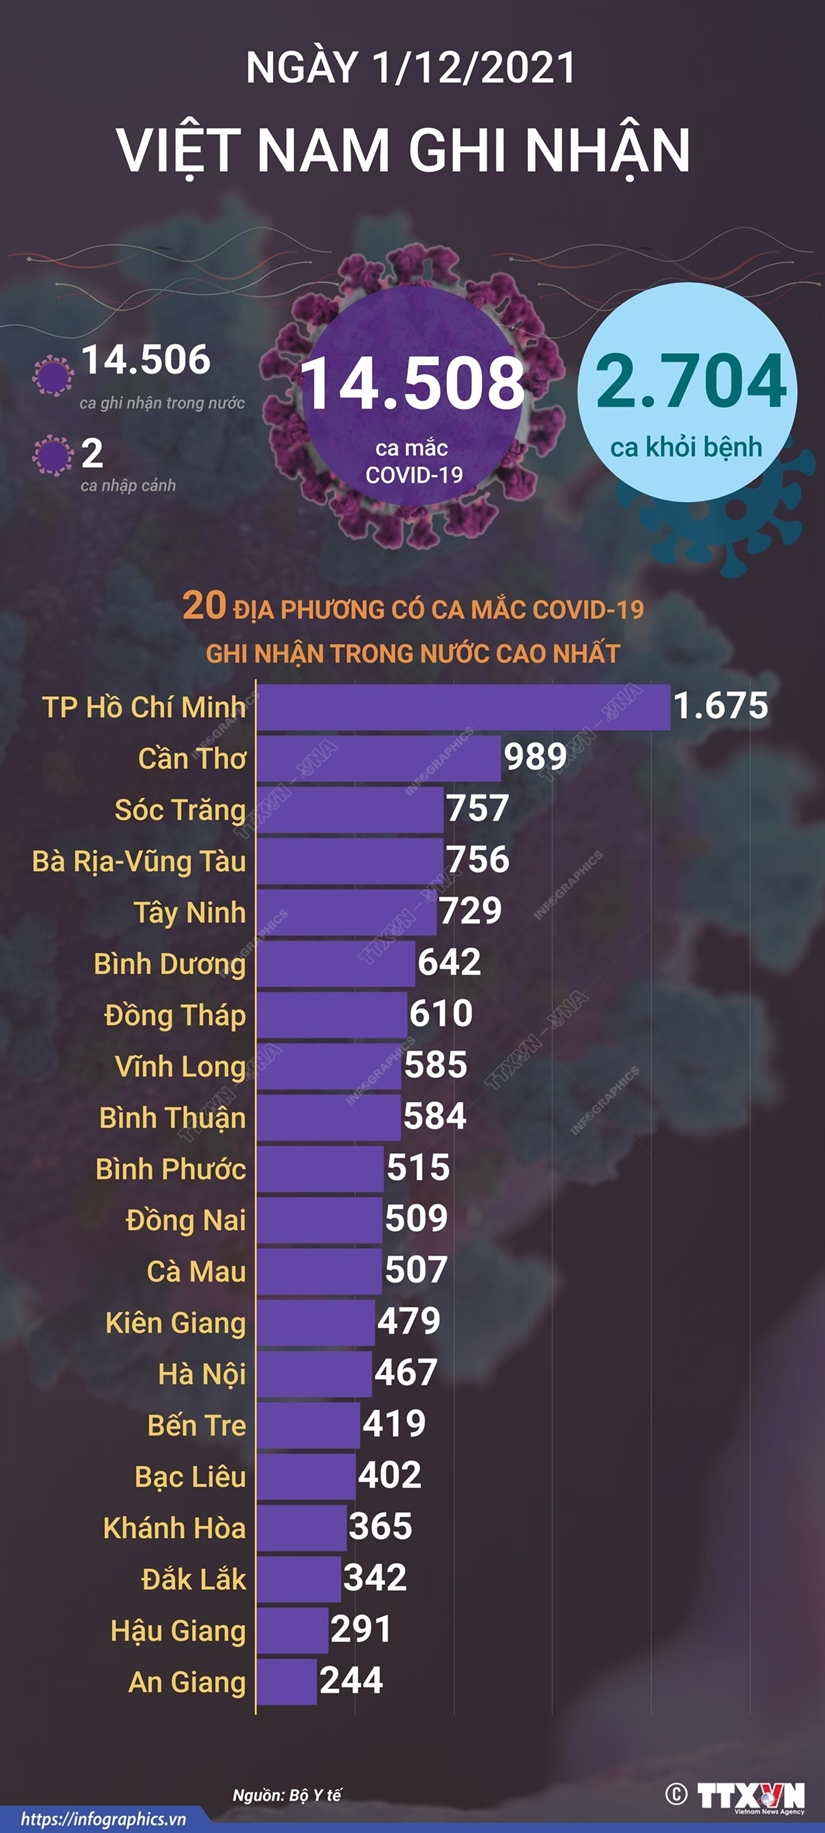 Viet Nam co them 14.508 ca mac COVID-19, 2.704 ca khoi benh hinh anh 1